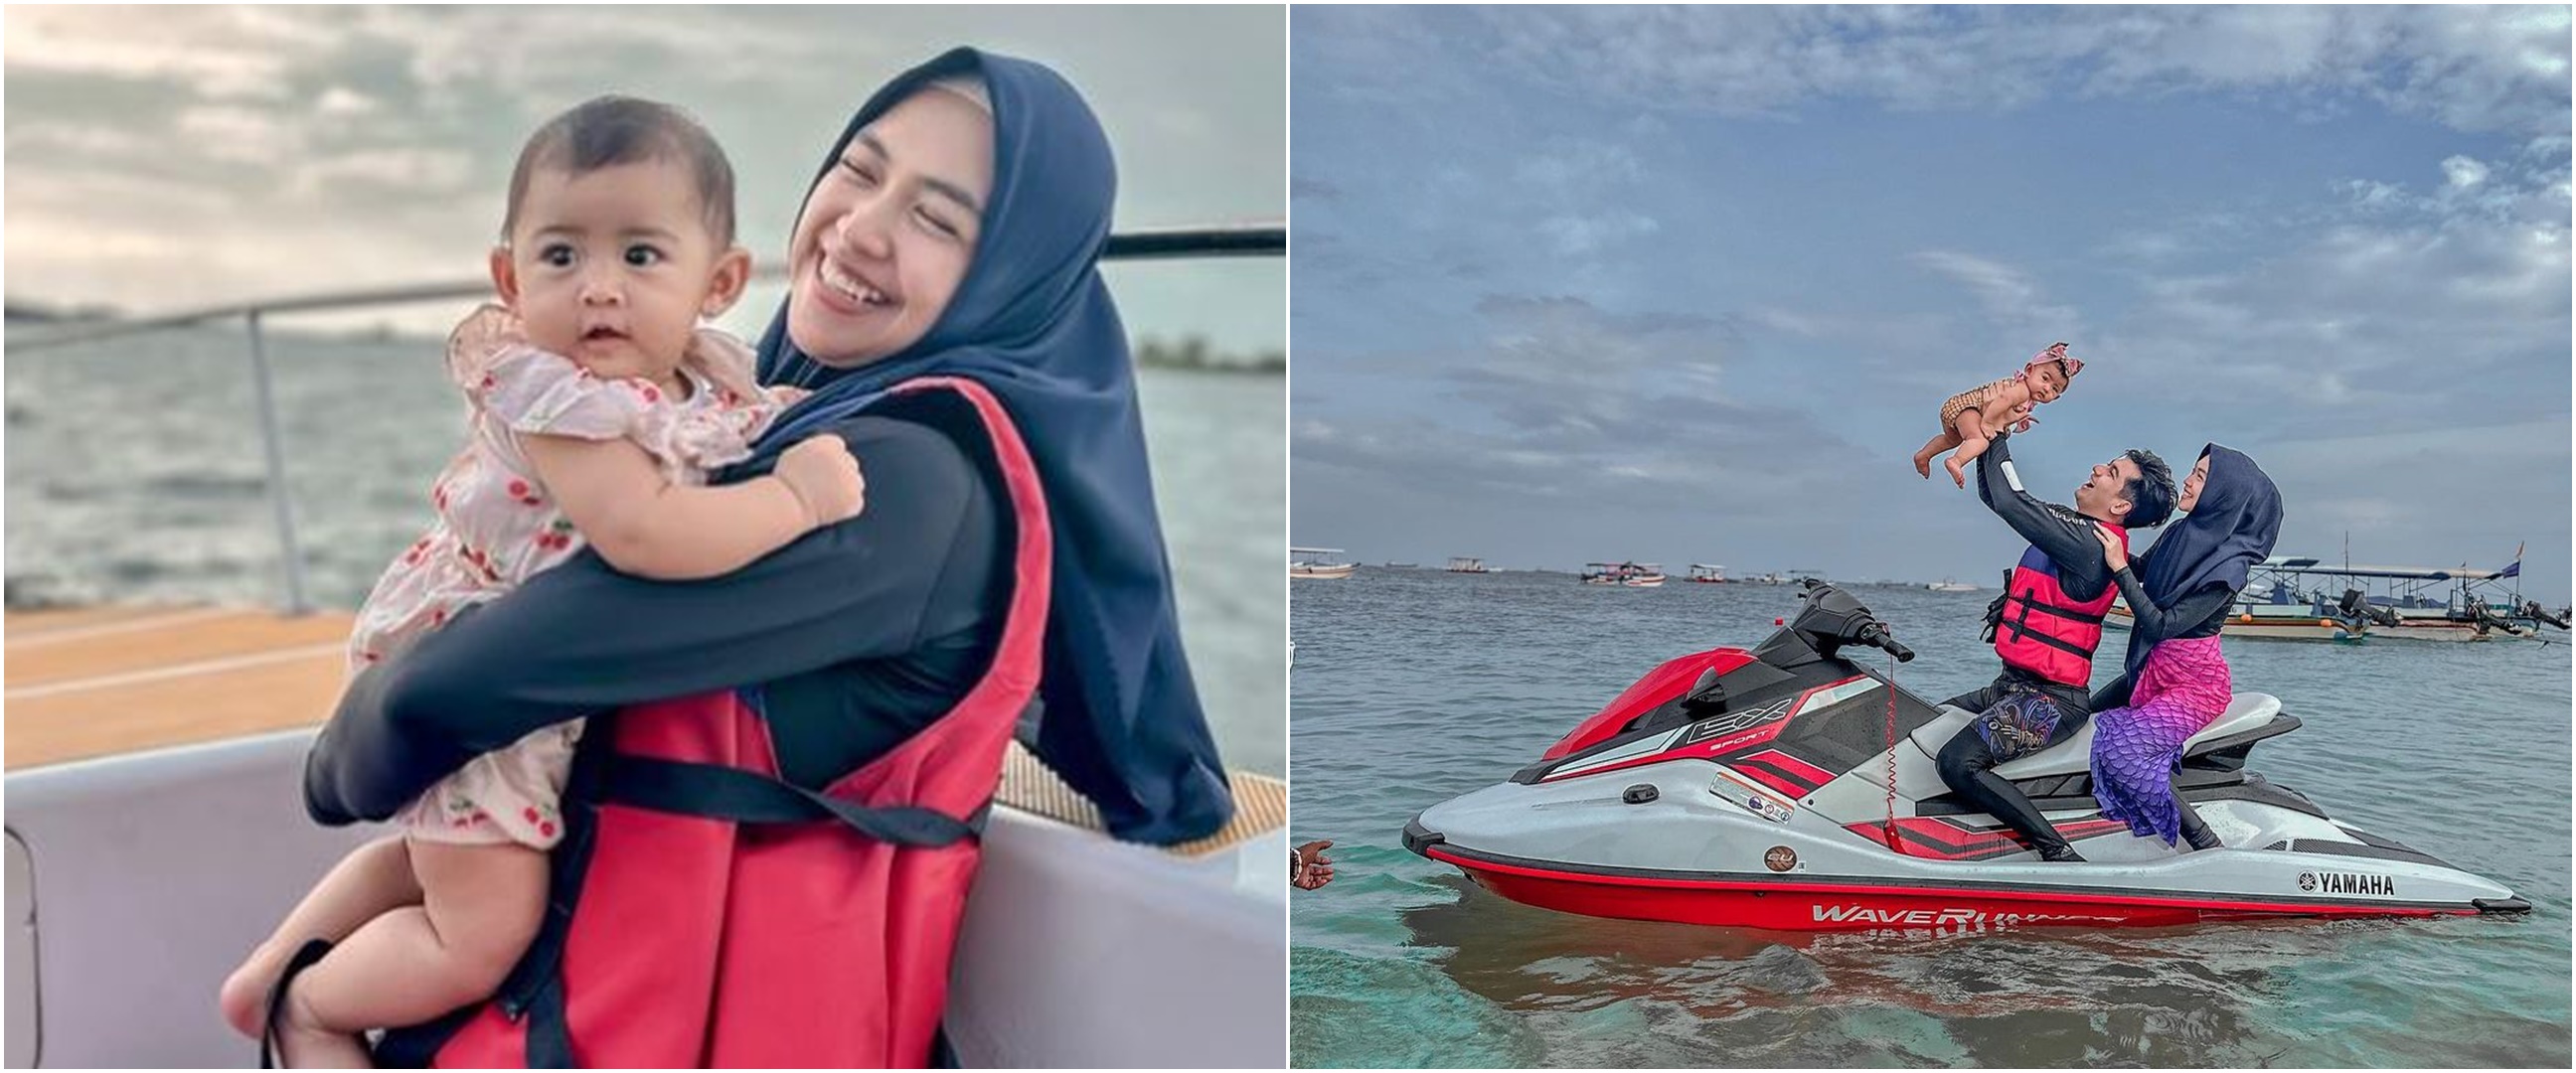 Ajak baby Moana naik jetski di laut, Ria Ricis dianggap bahayakan keselamatan anak